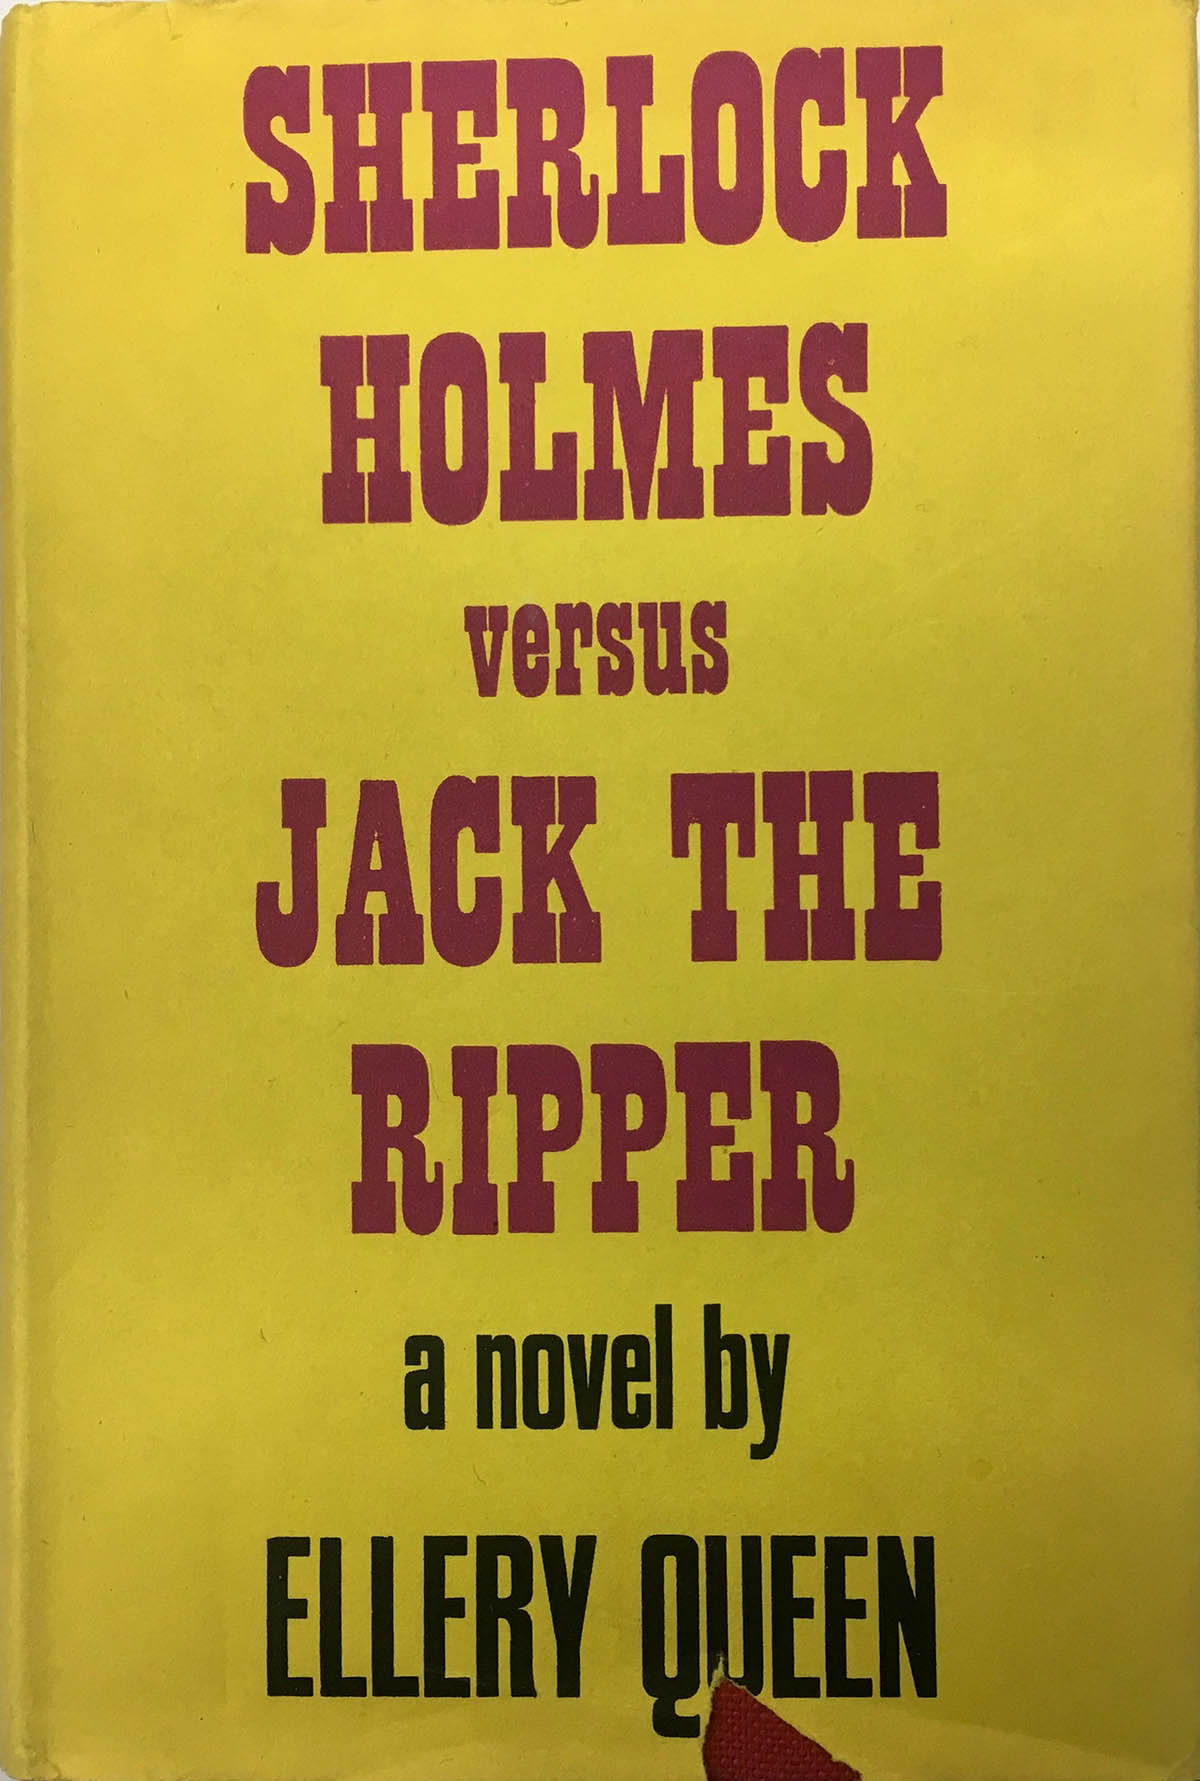 Queen, Ellery. Sherlock Holmes versus Jack the Ripper, London: Victor Gollsncz Ltd., 1967.